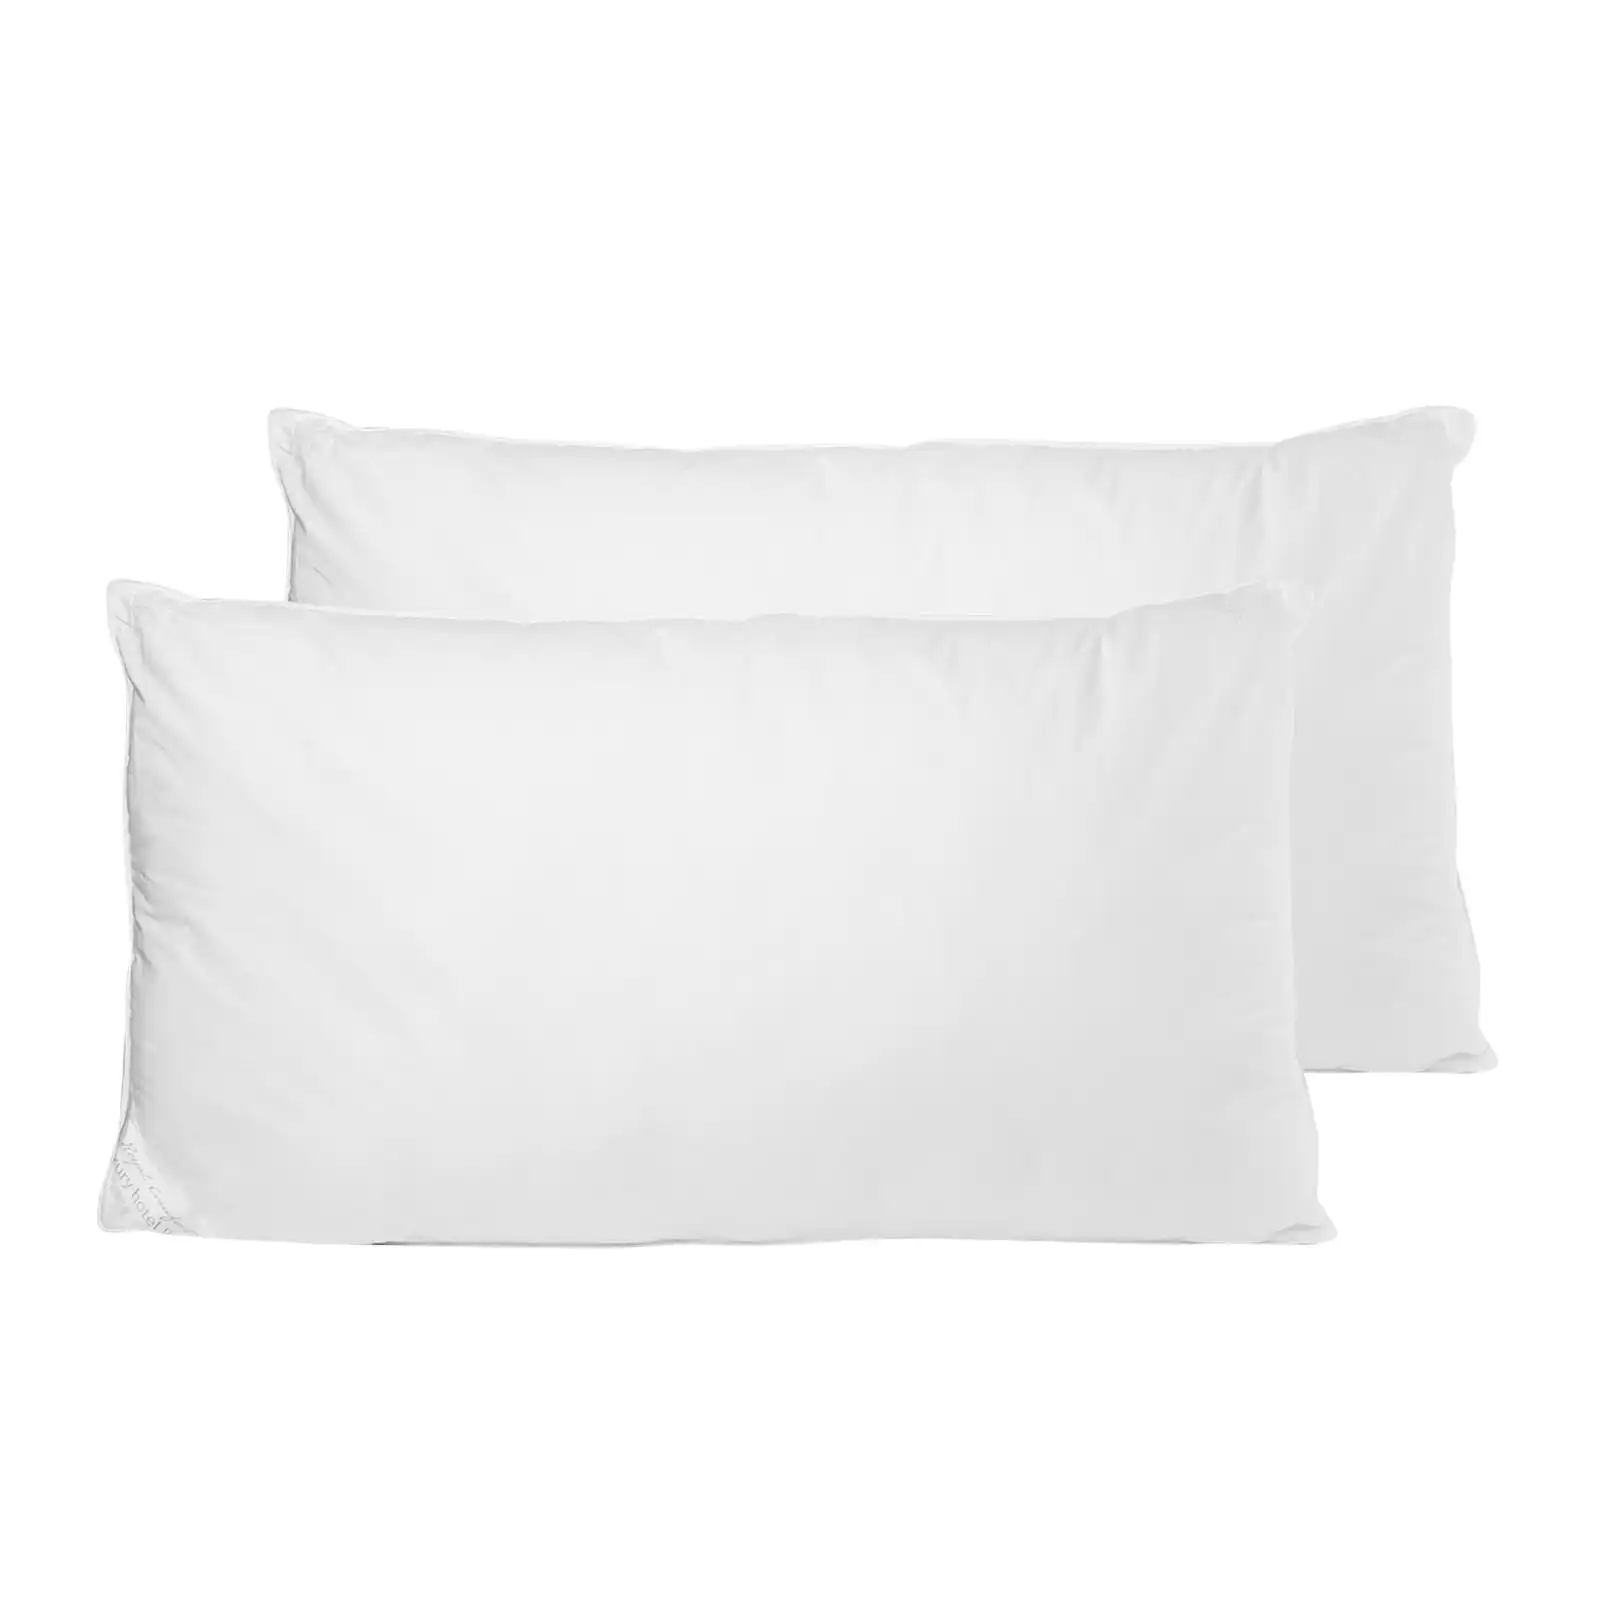 2 Pack Royal Comfort Cotton Cover 233TC Microfibre Luxury Signature Hotel Pillow